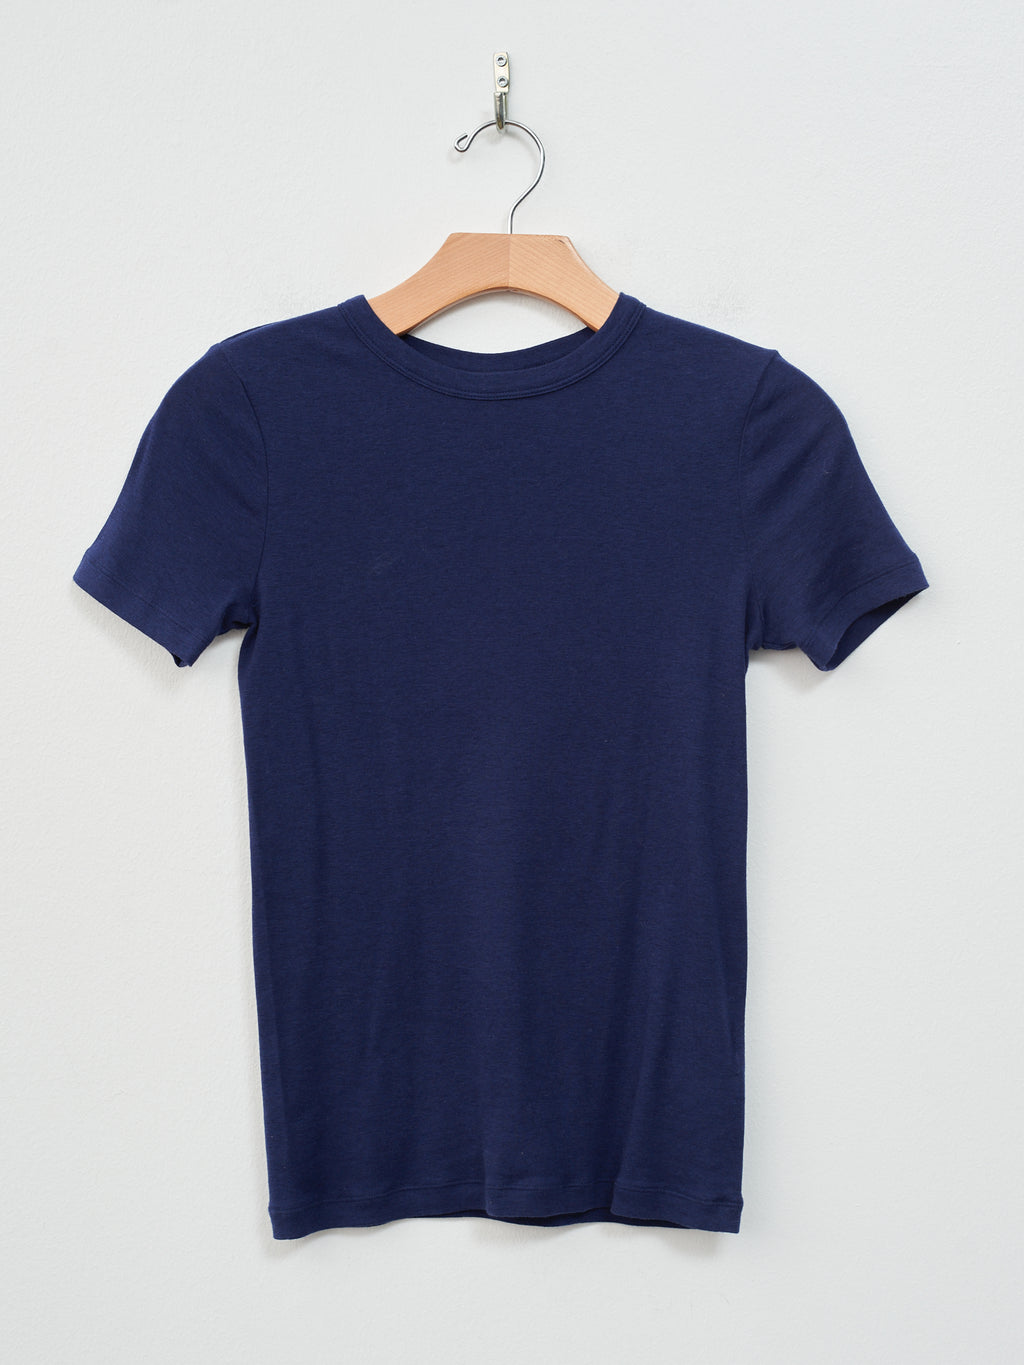 Namu Shop - Babaco Cotton/Silk Basic T-Shirt - Navy